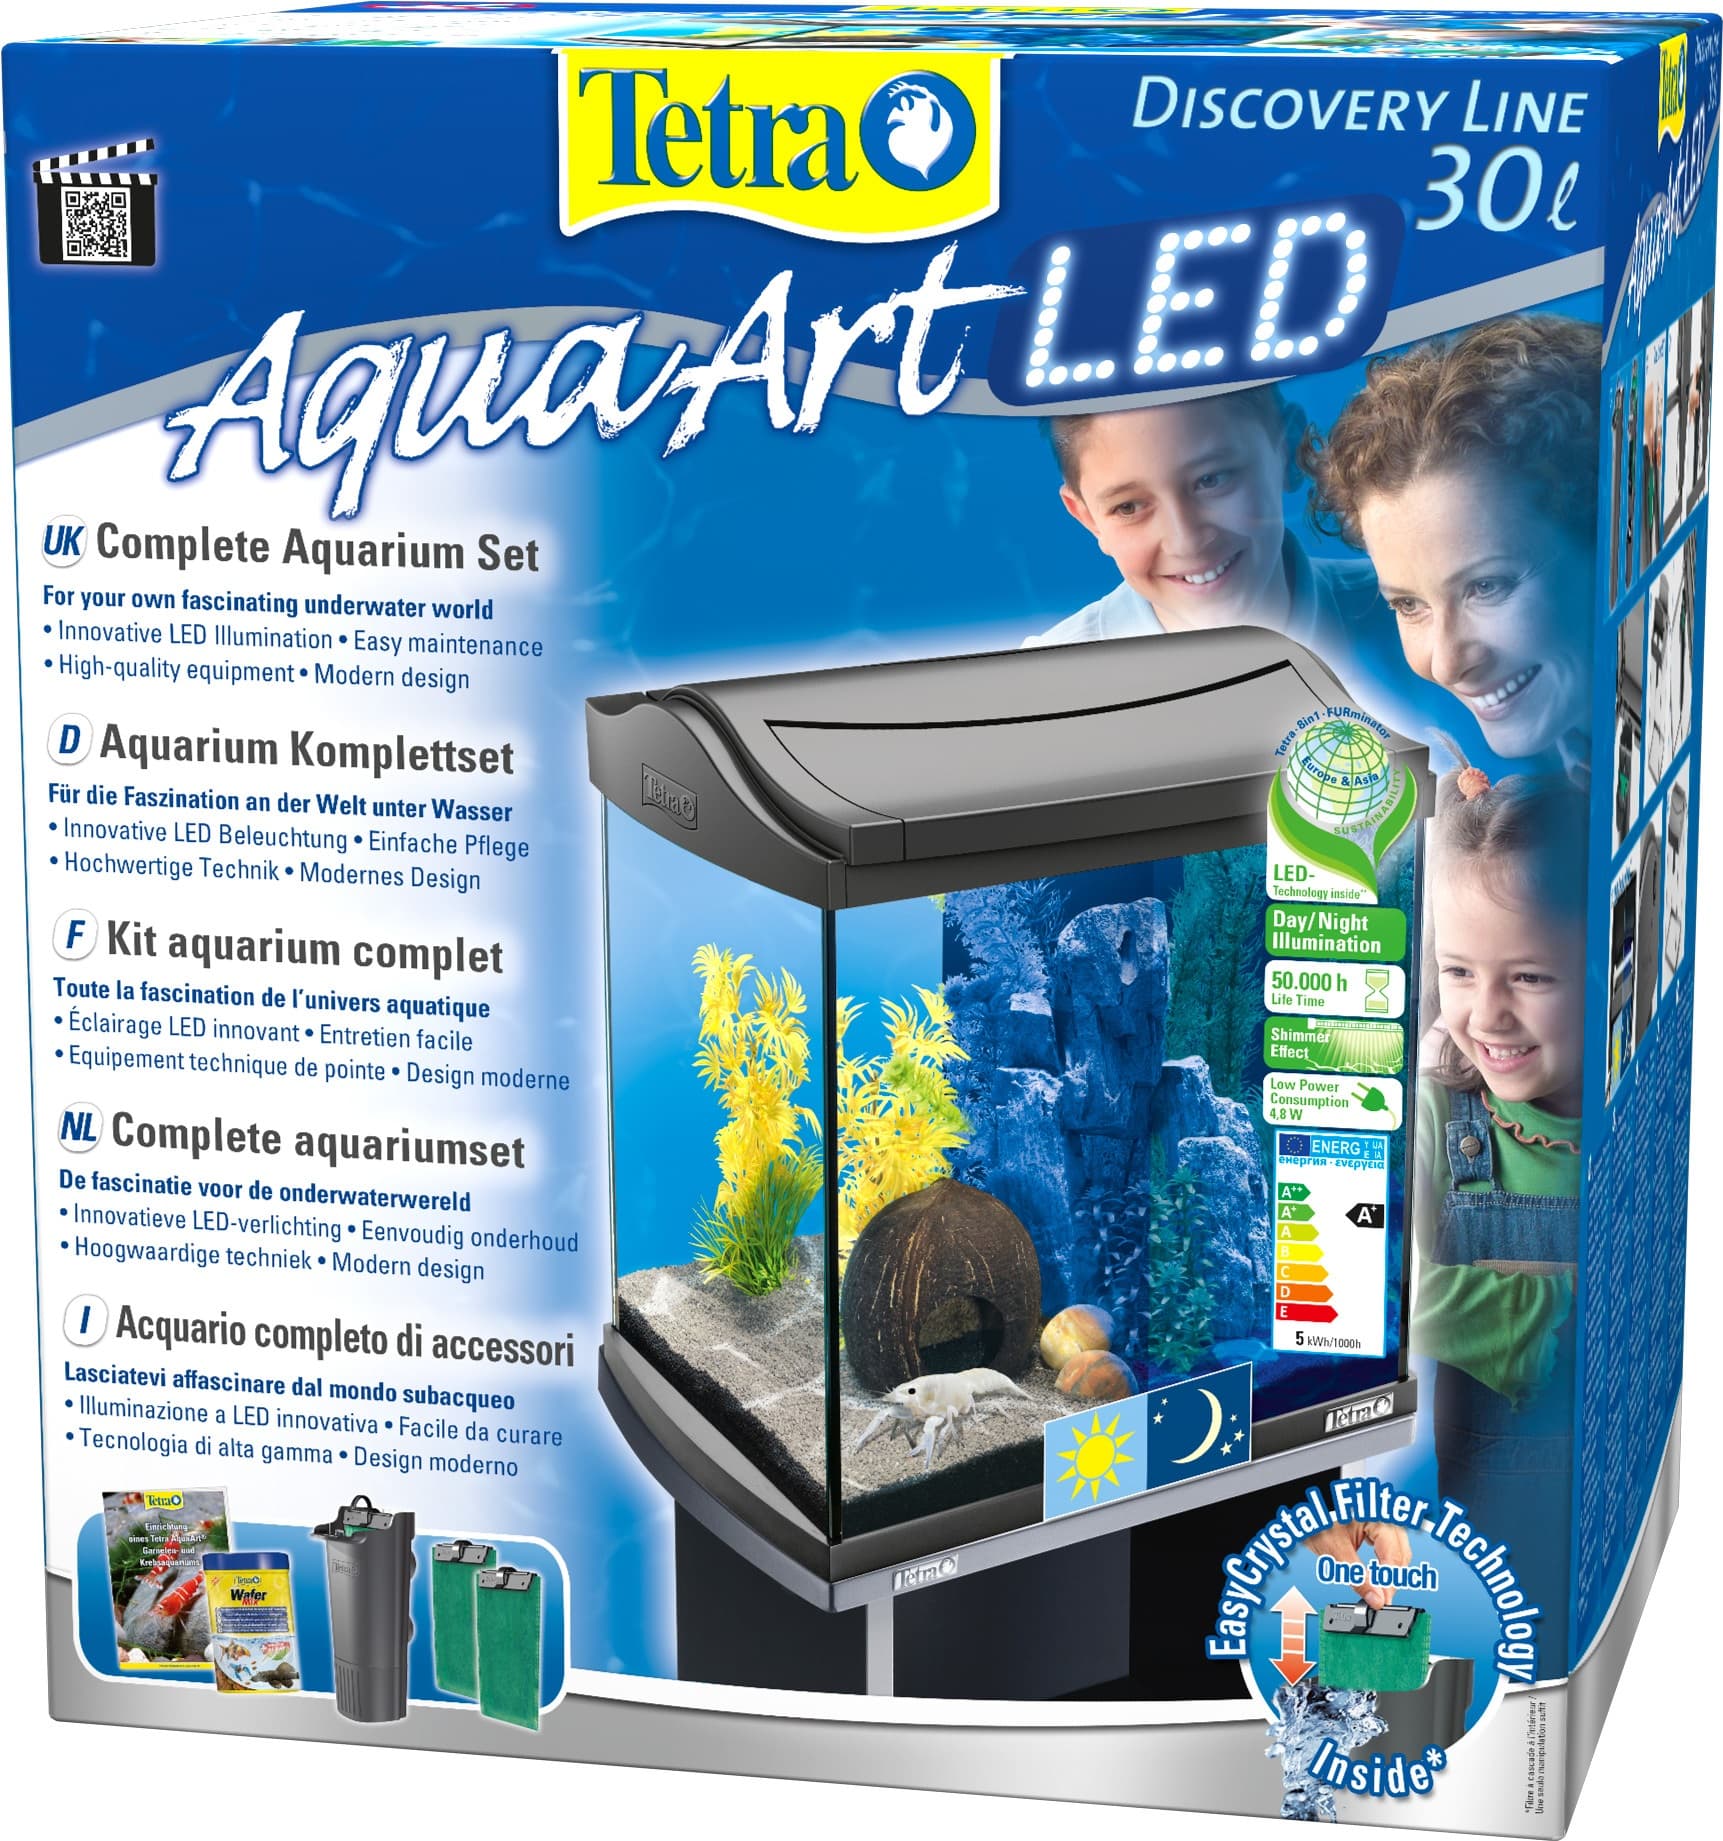 Tetra AquaArt Discovery Line LED Cray 30 л